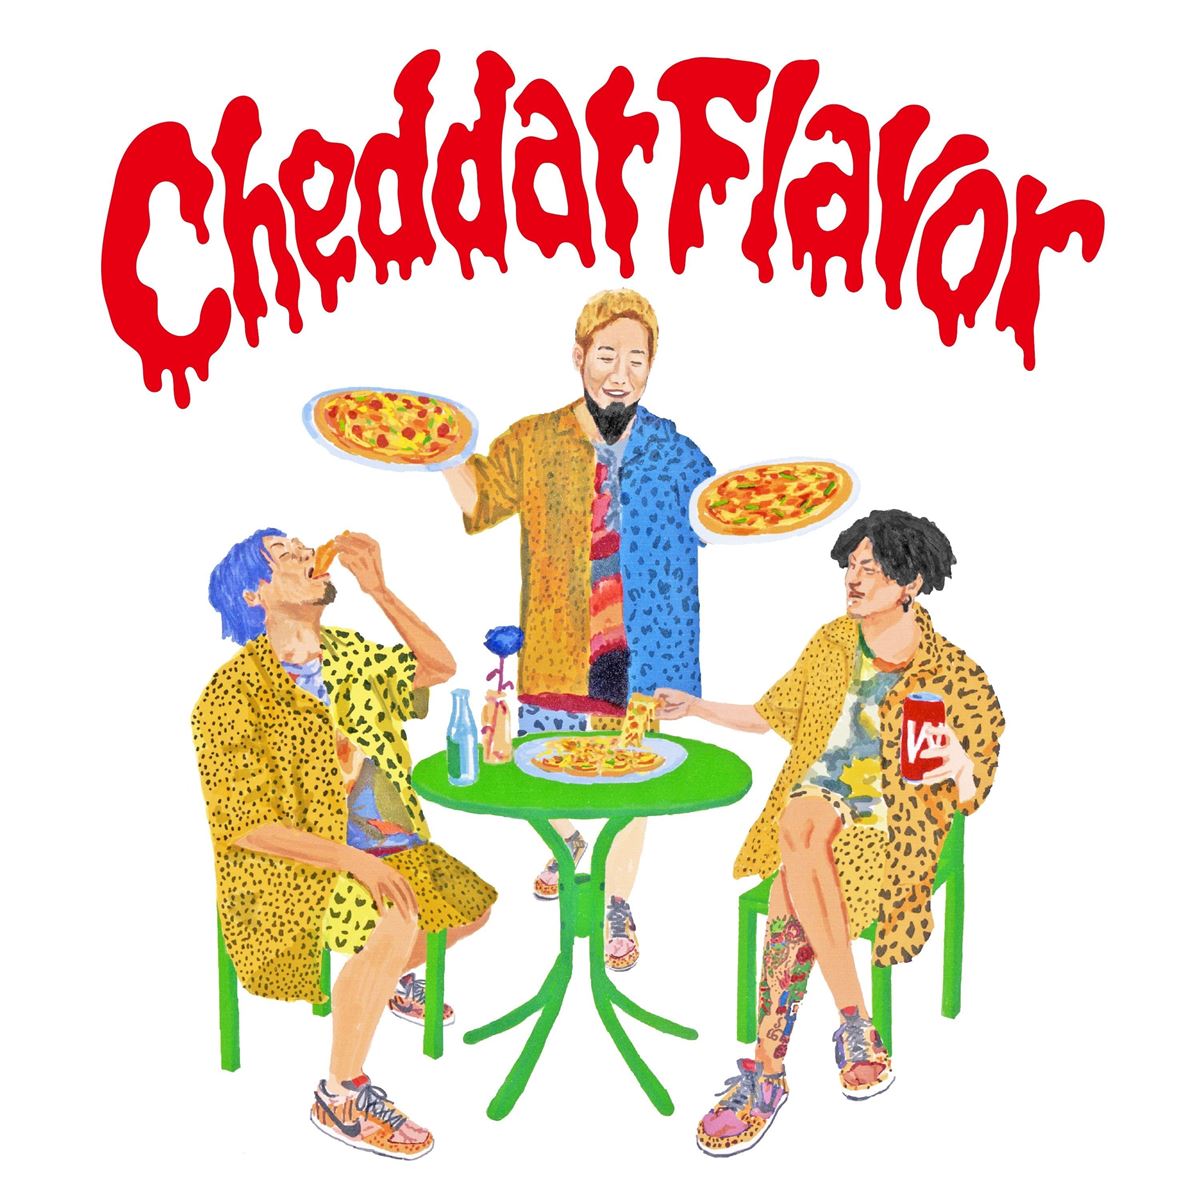 『Cheddar Flavor』ジャケット